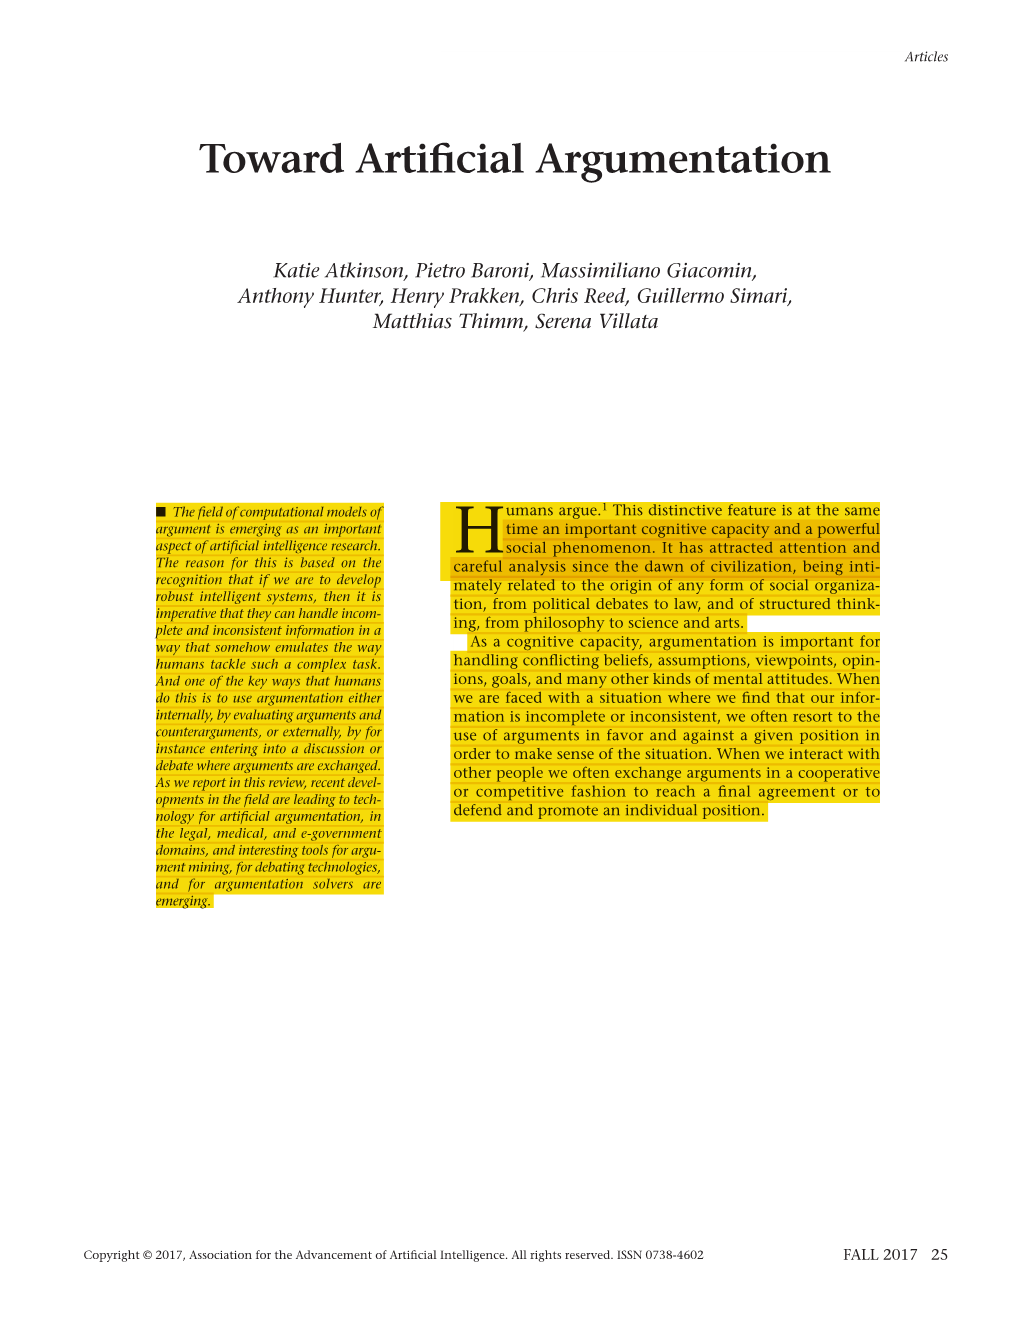 Toward Artificial Argumentation